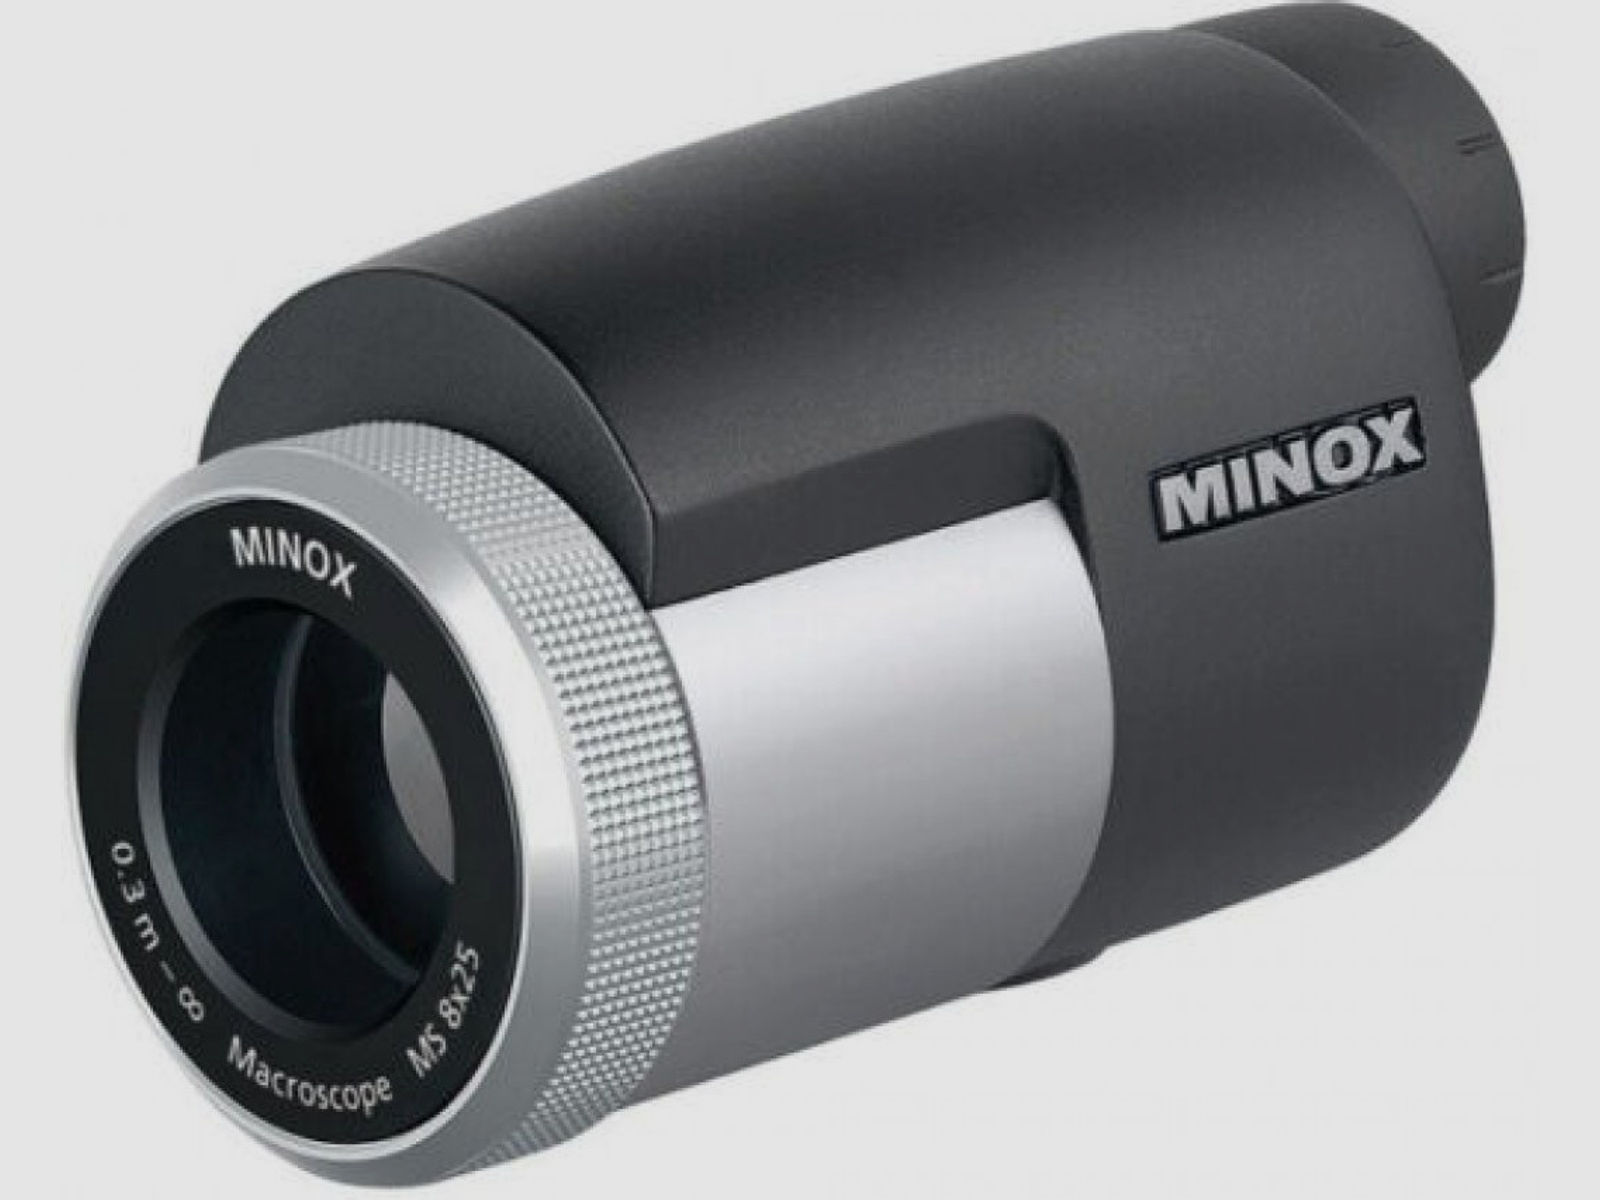 Minox Minox MS 8x25 Macroscope Silber/Schwarz -13,90€ 10% Fernglas Rabatt 125,10 Effektivpreis